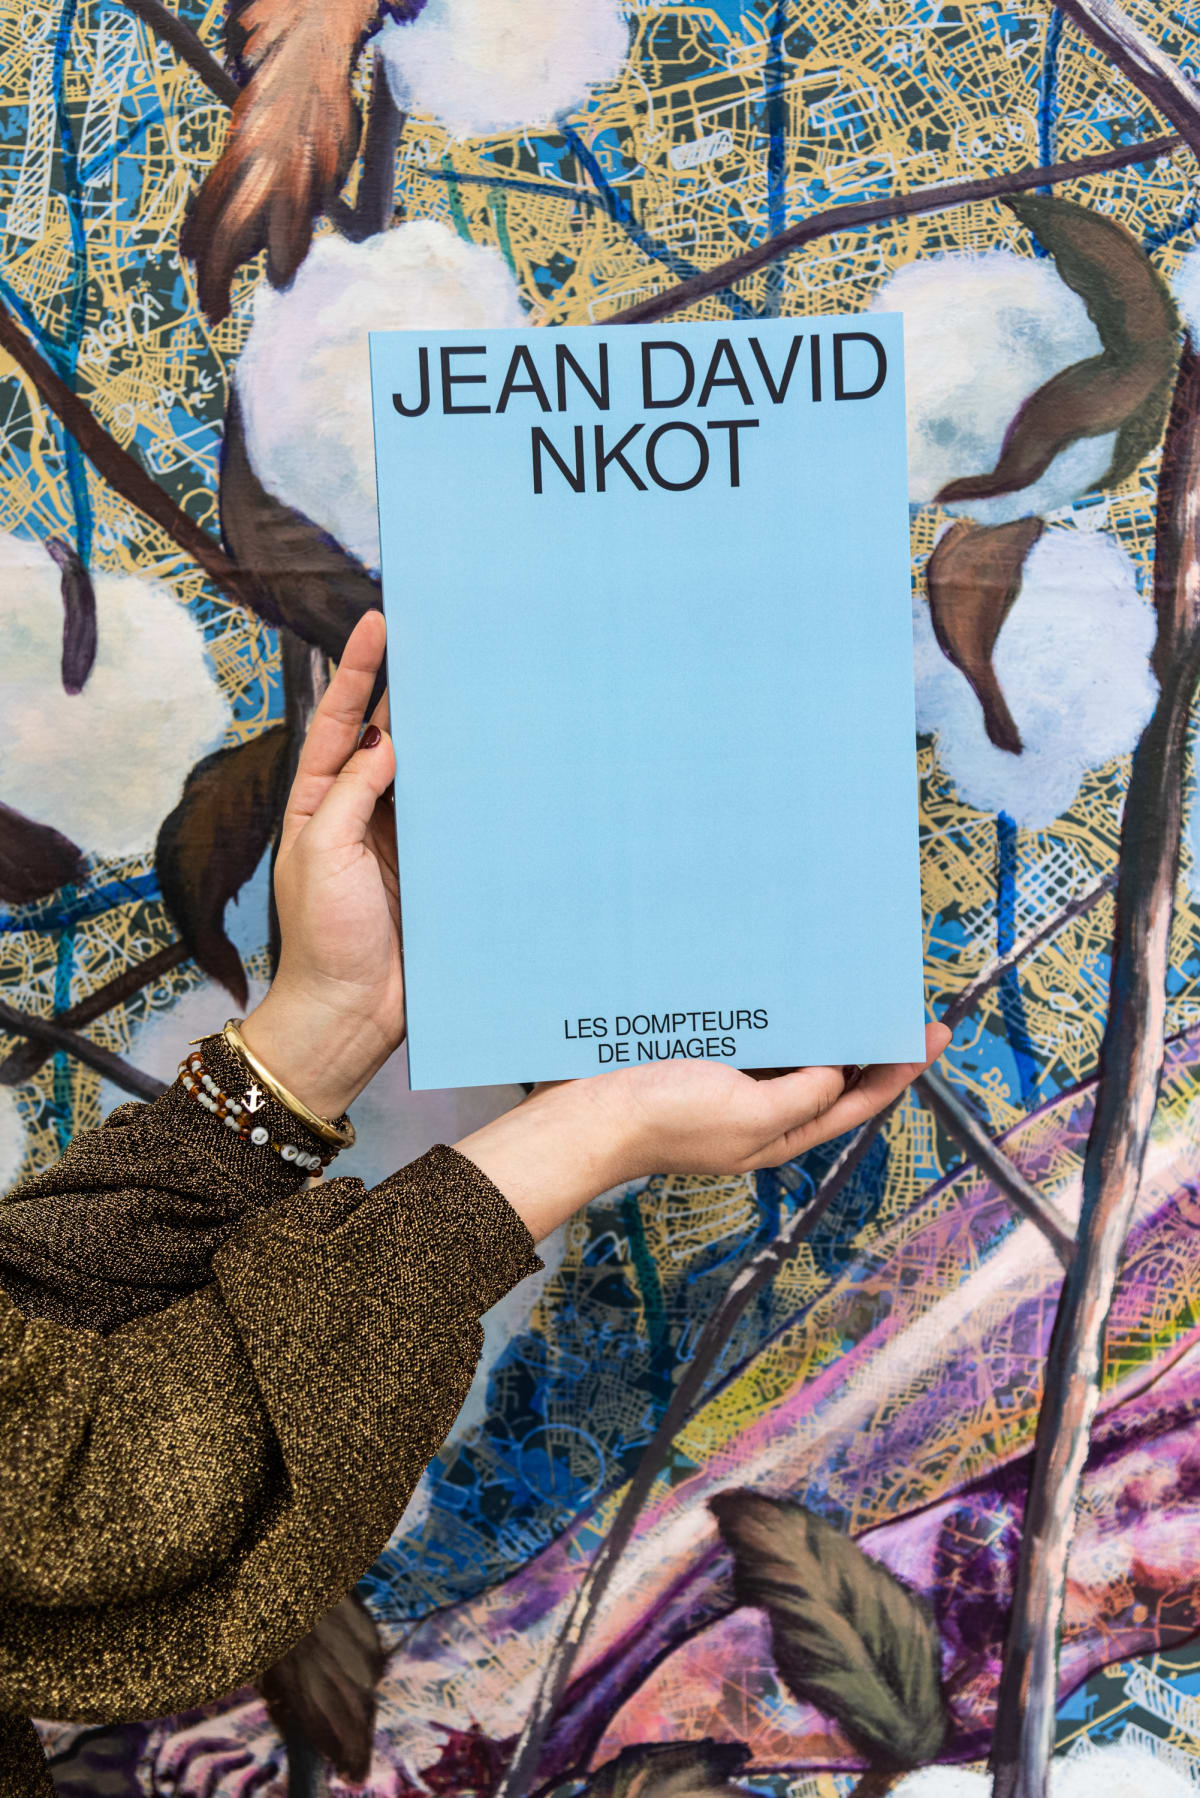 Jean David Nkot